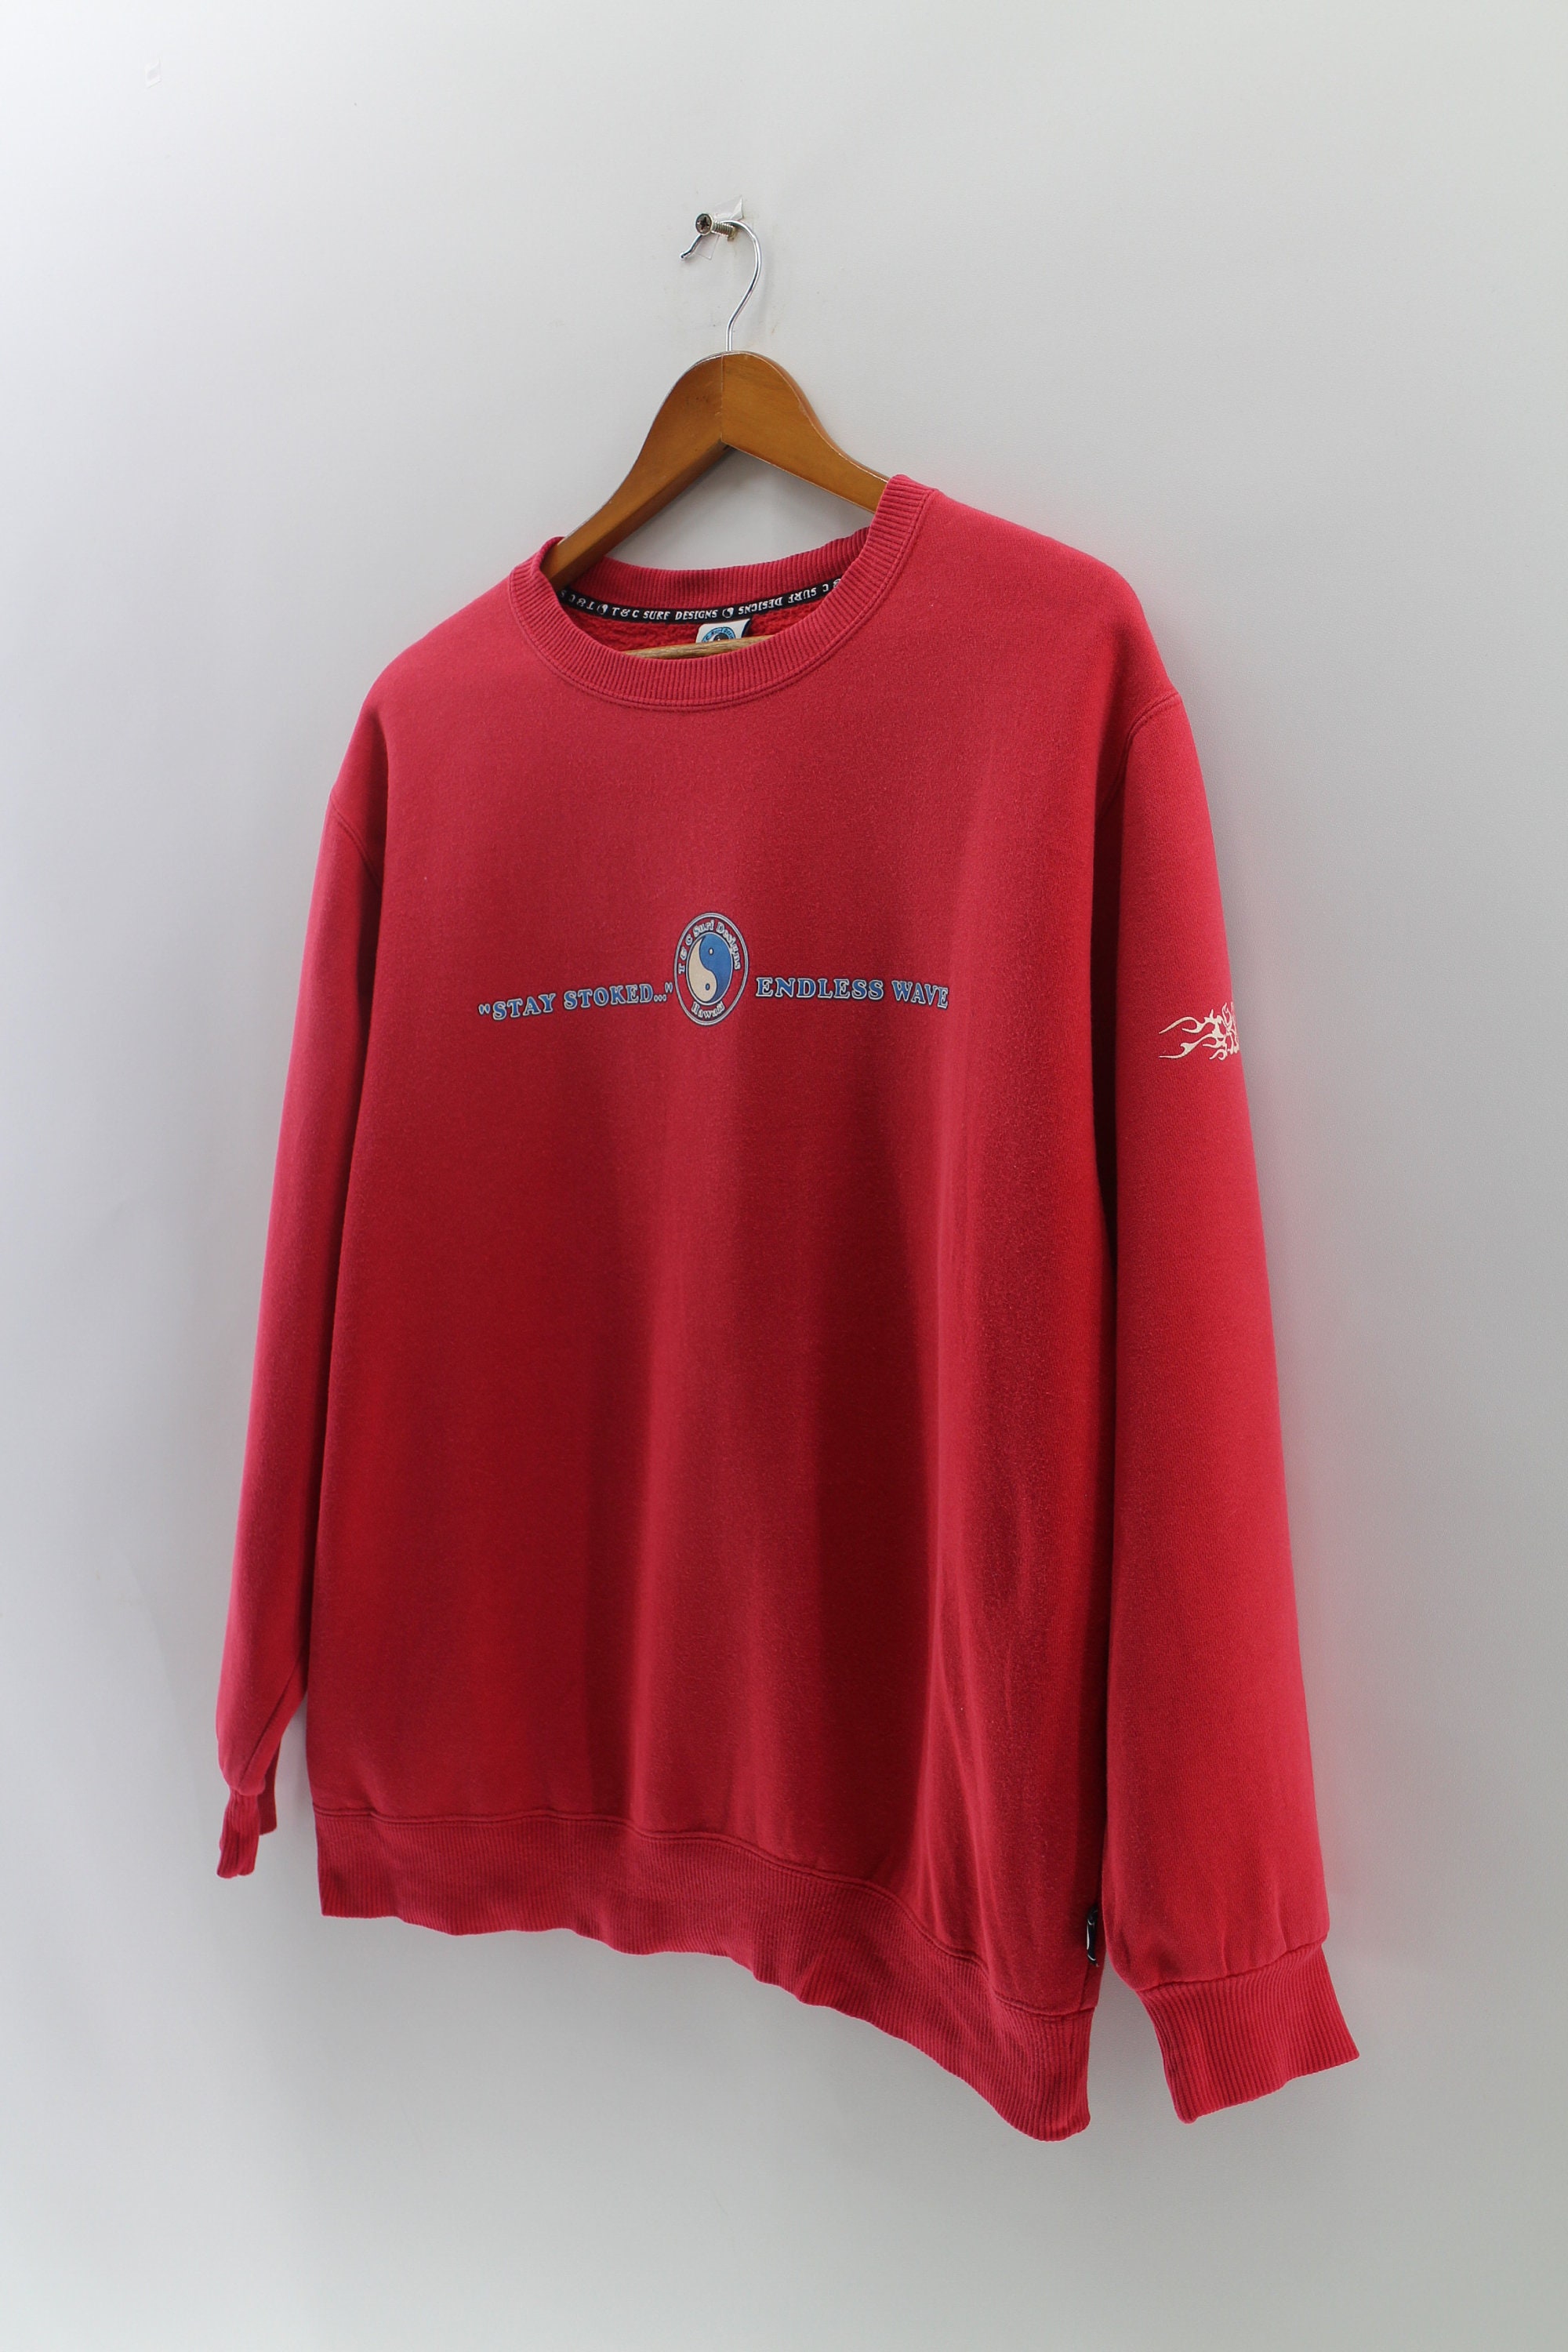 T&C SURF Design Pullover Sweatshirt Unisex Medium Vintage 90s | Etsy